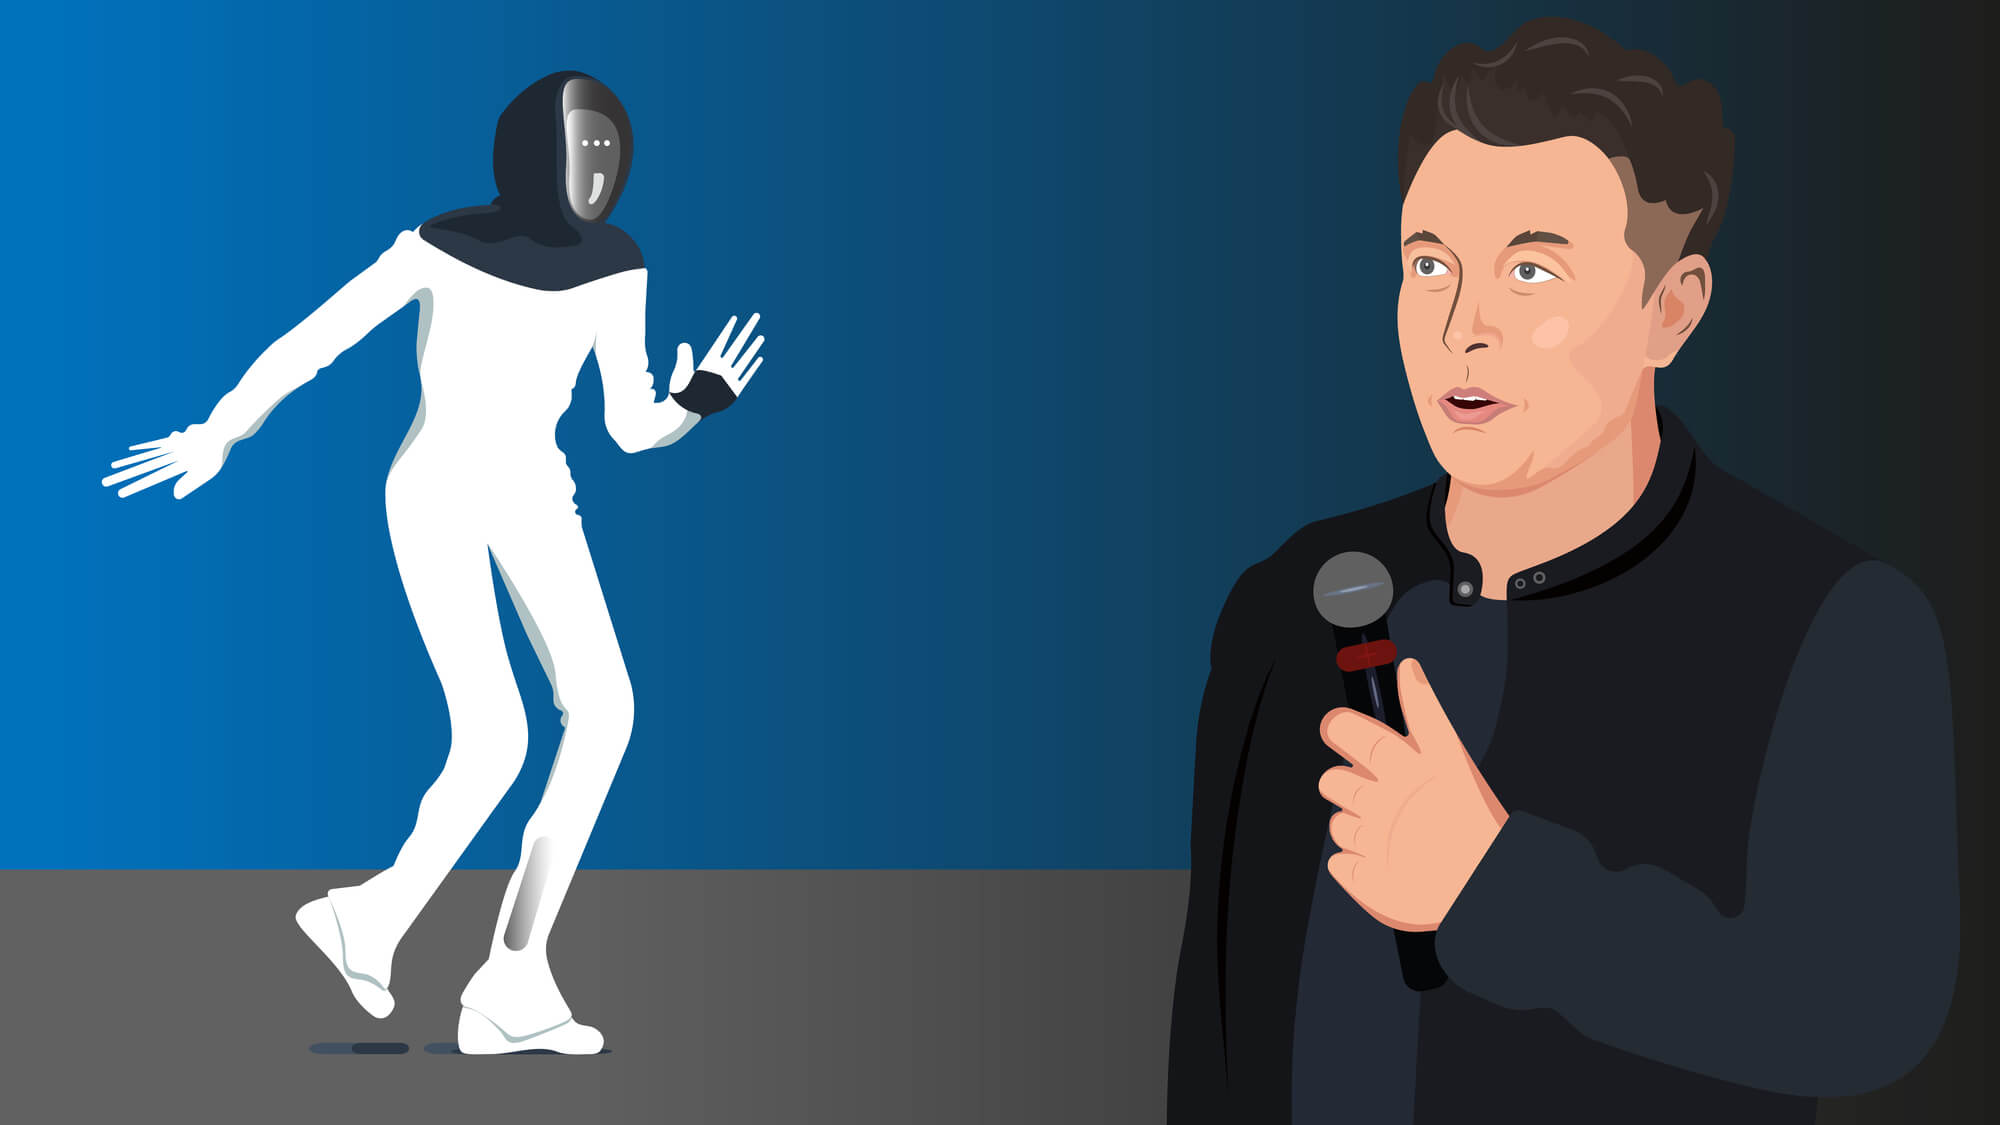 Elon Musk announcing the Tesla robot, 2021. Illustration: depositphotos.com